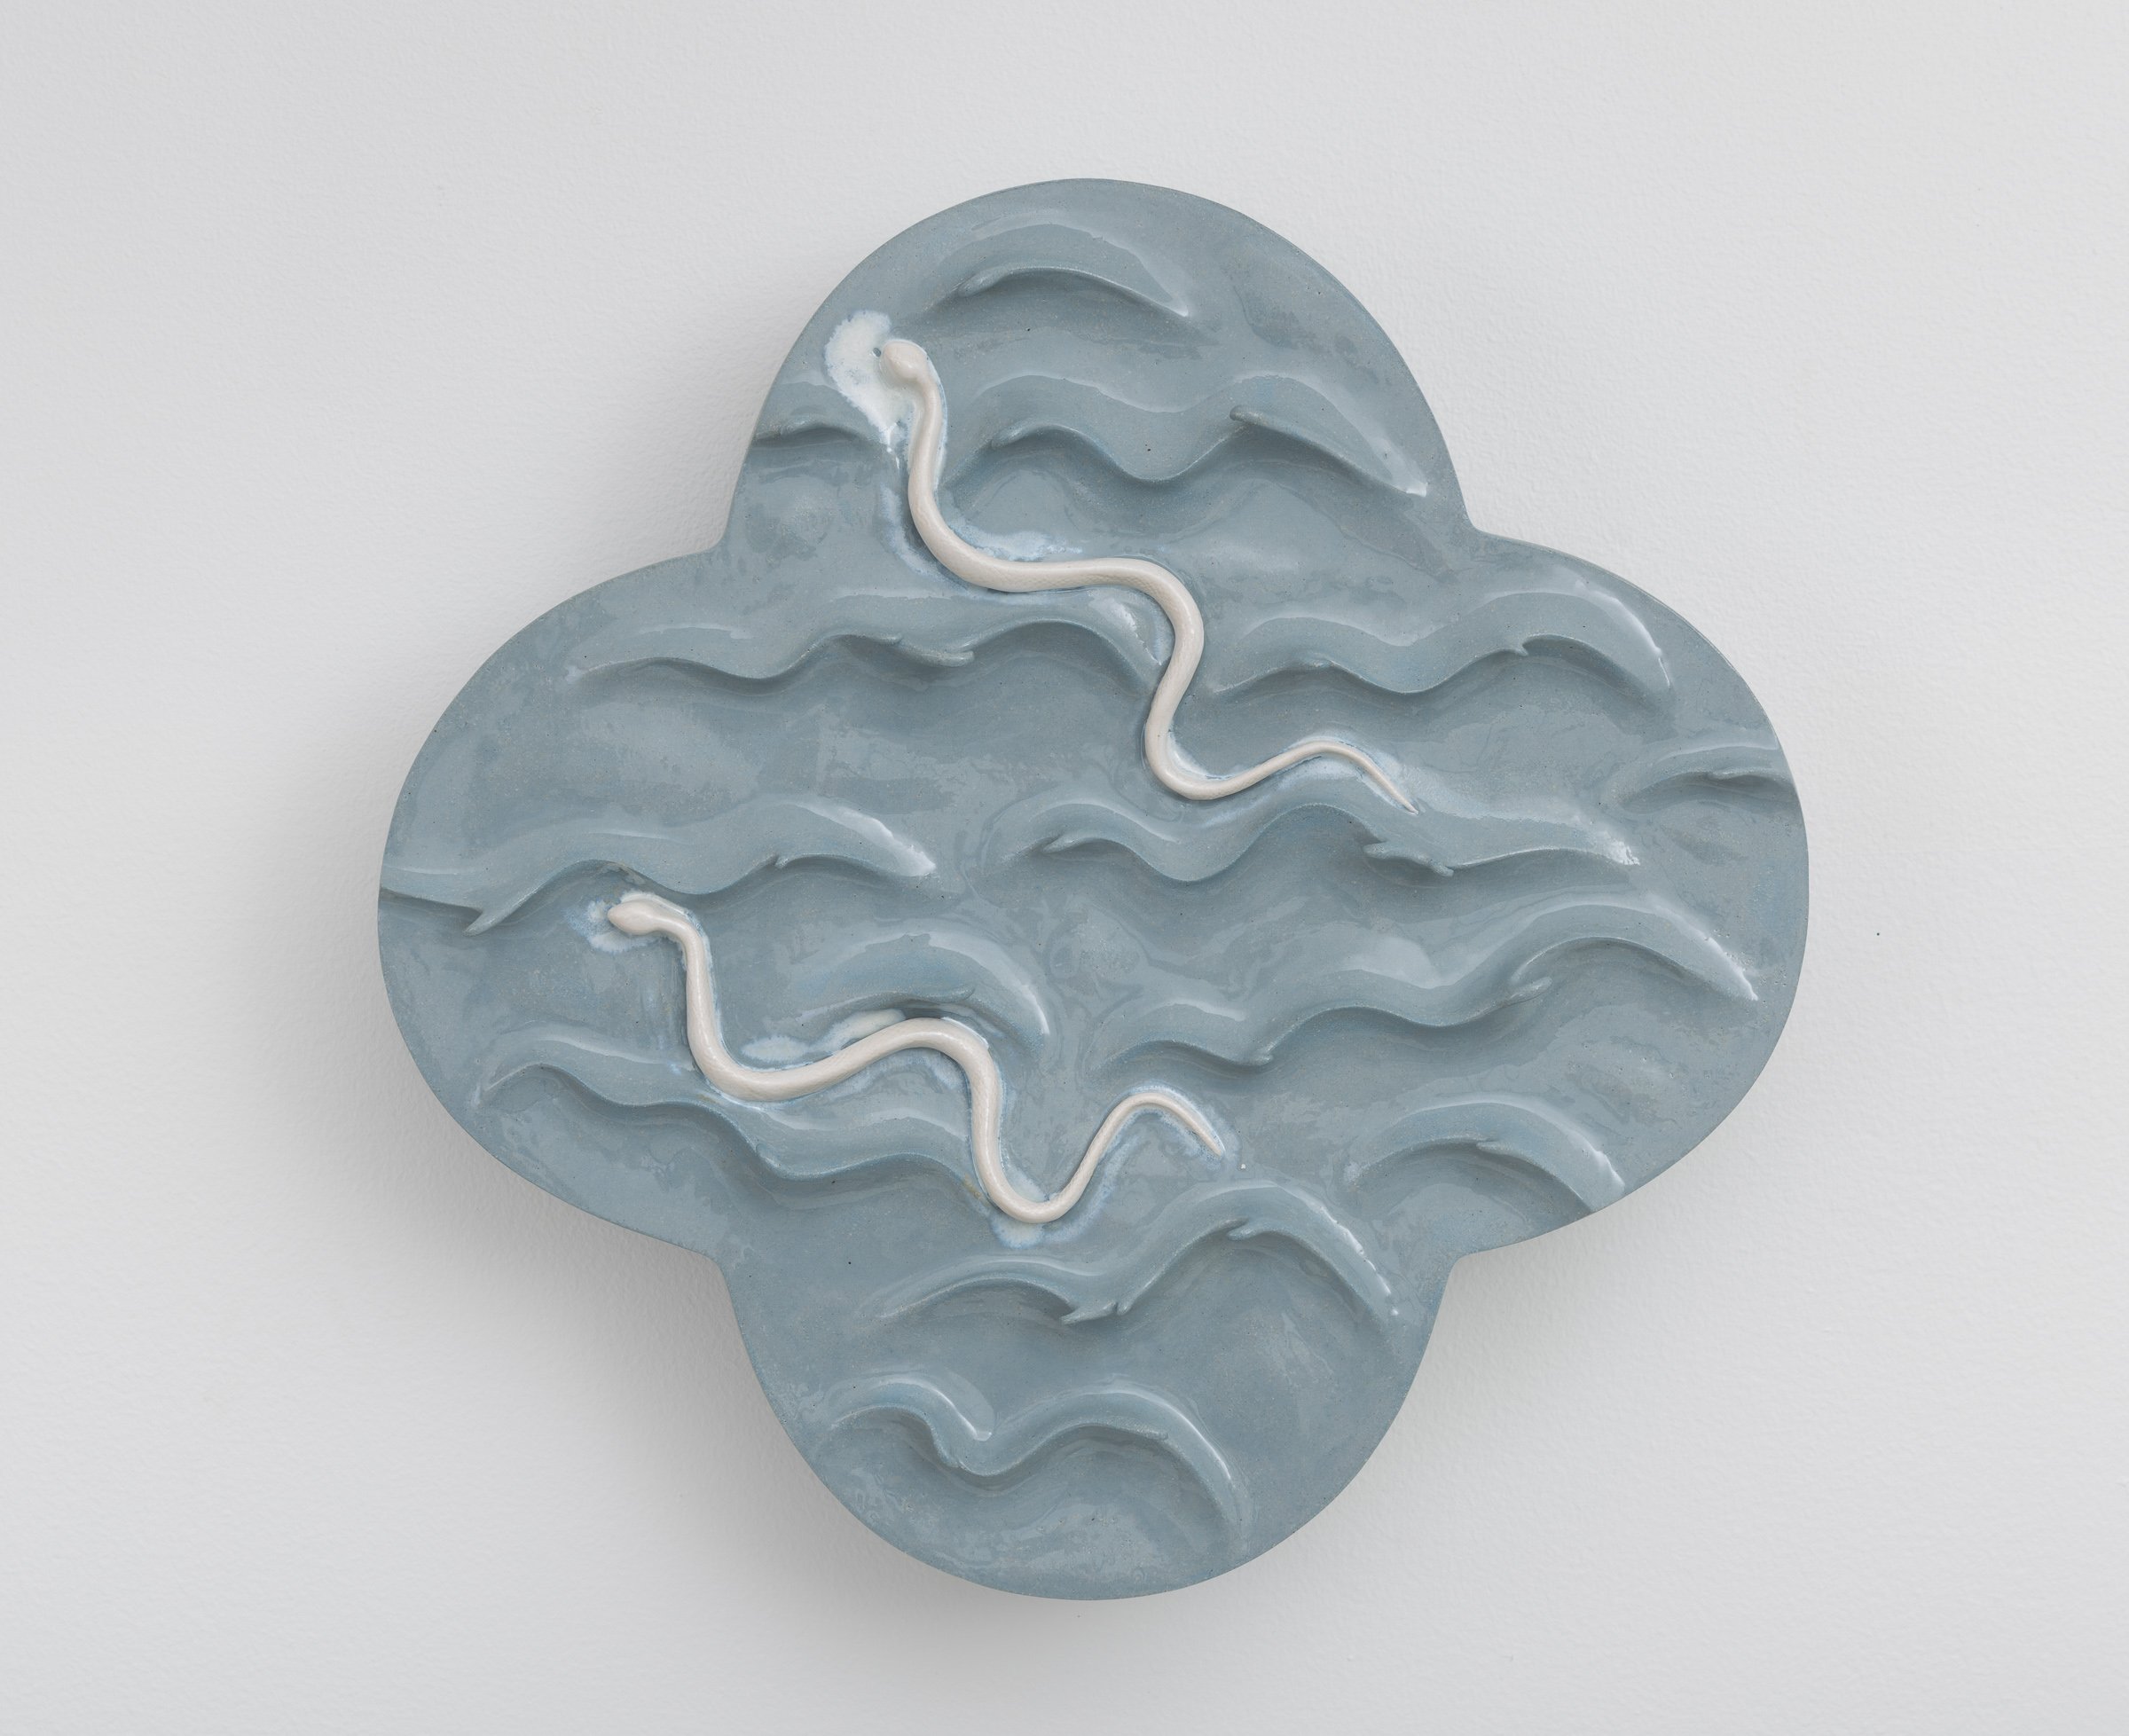  Landscape - Waves | 2022  Stoneware, porcelain, glazes/slab building, coiling, press molding. 40x40x11cm  Photo: Thomas Tveter 